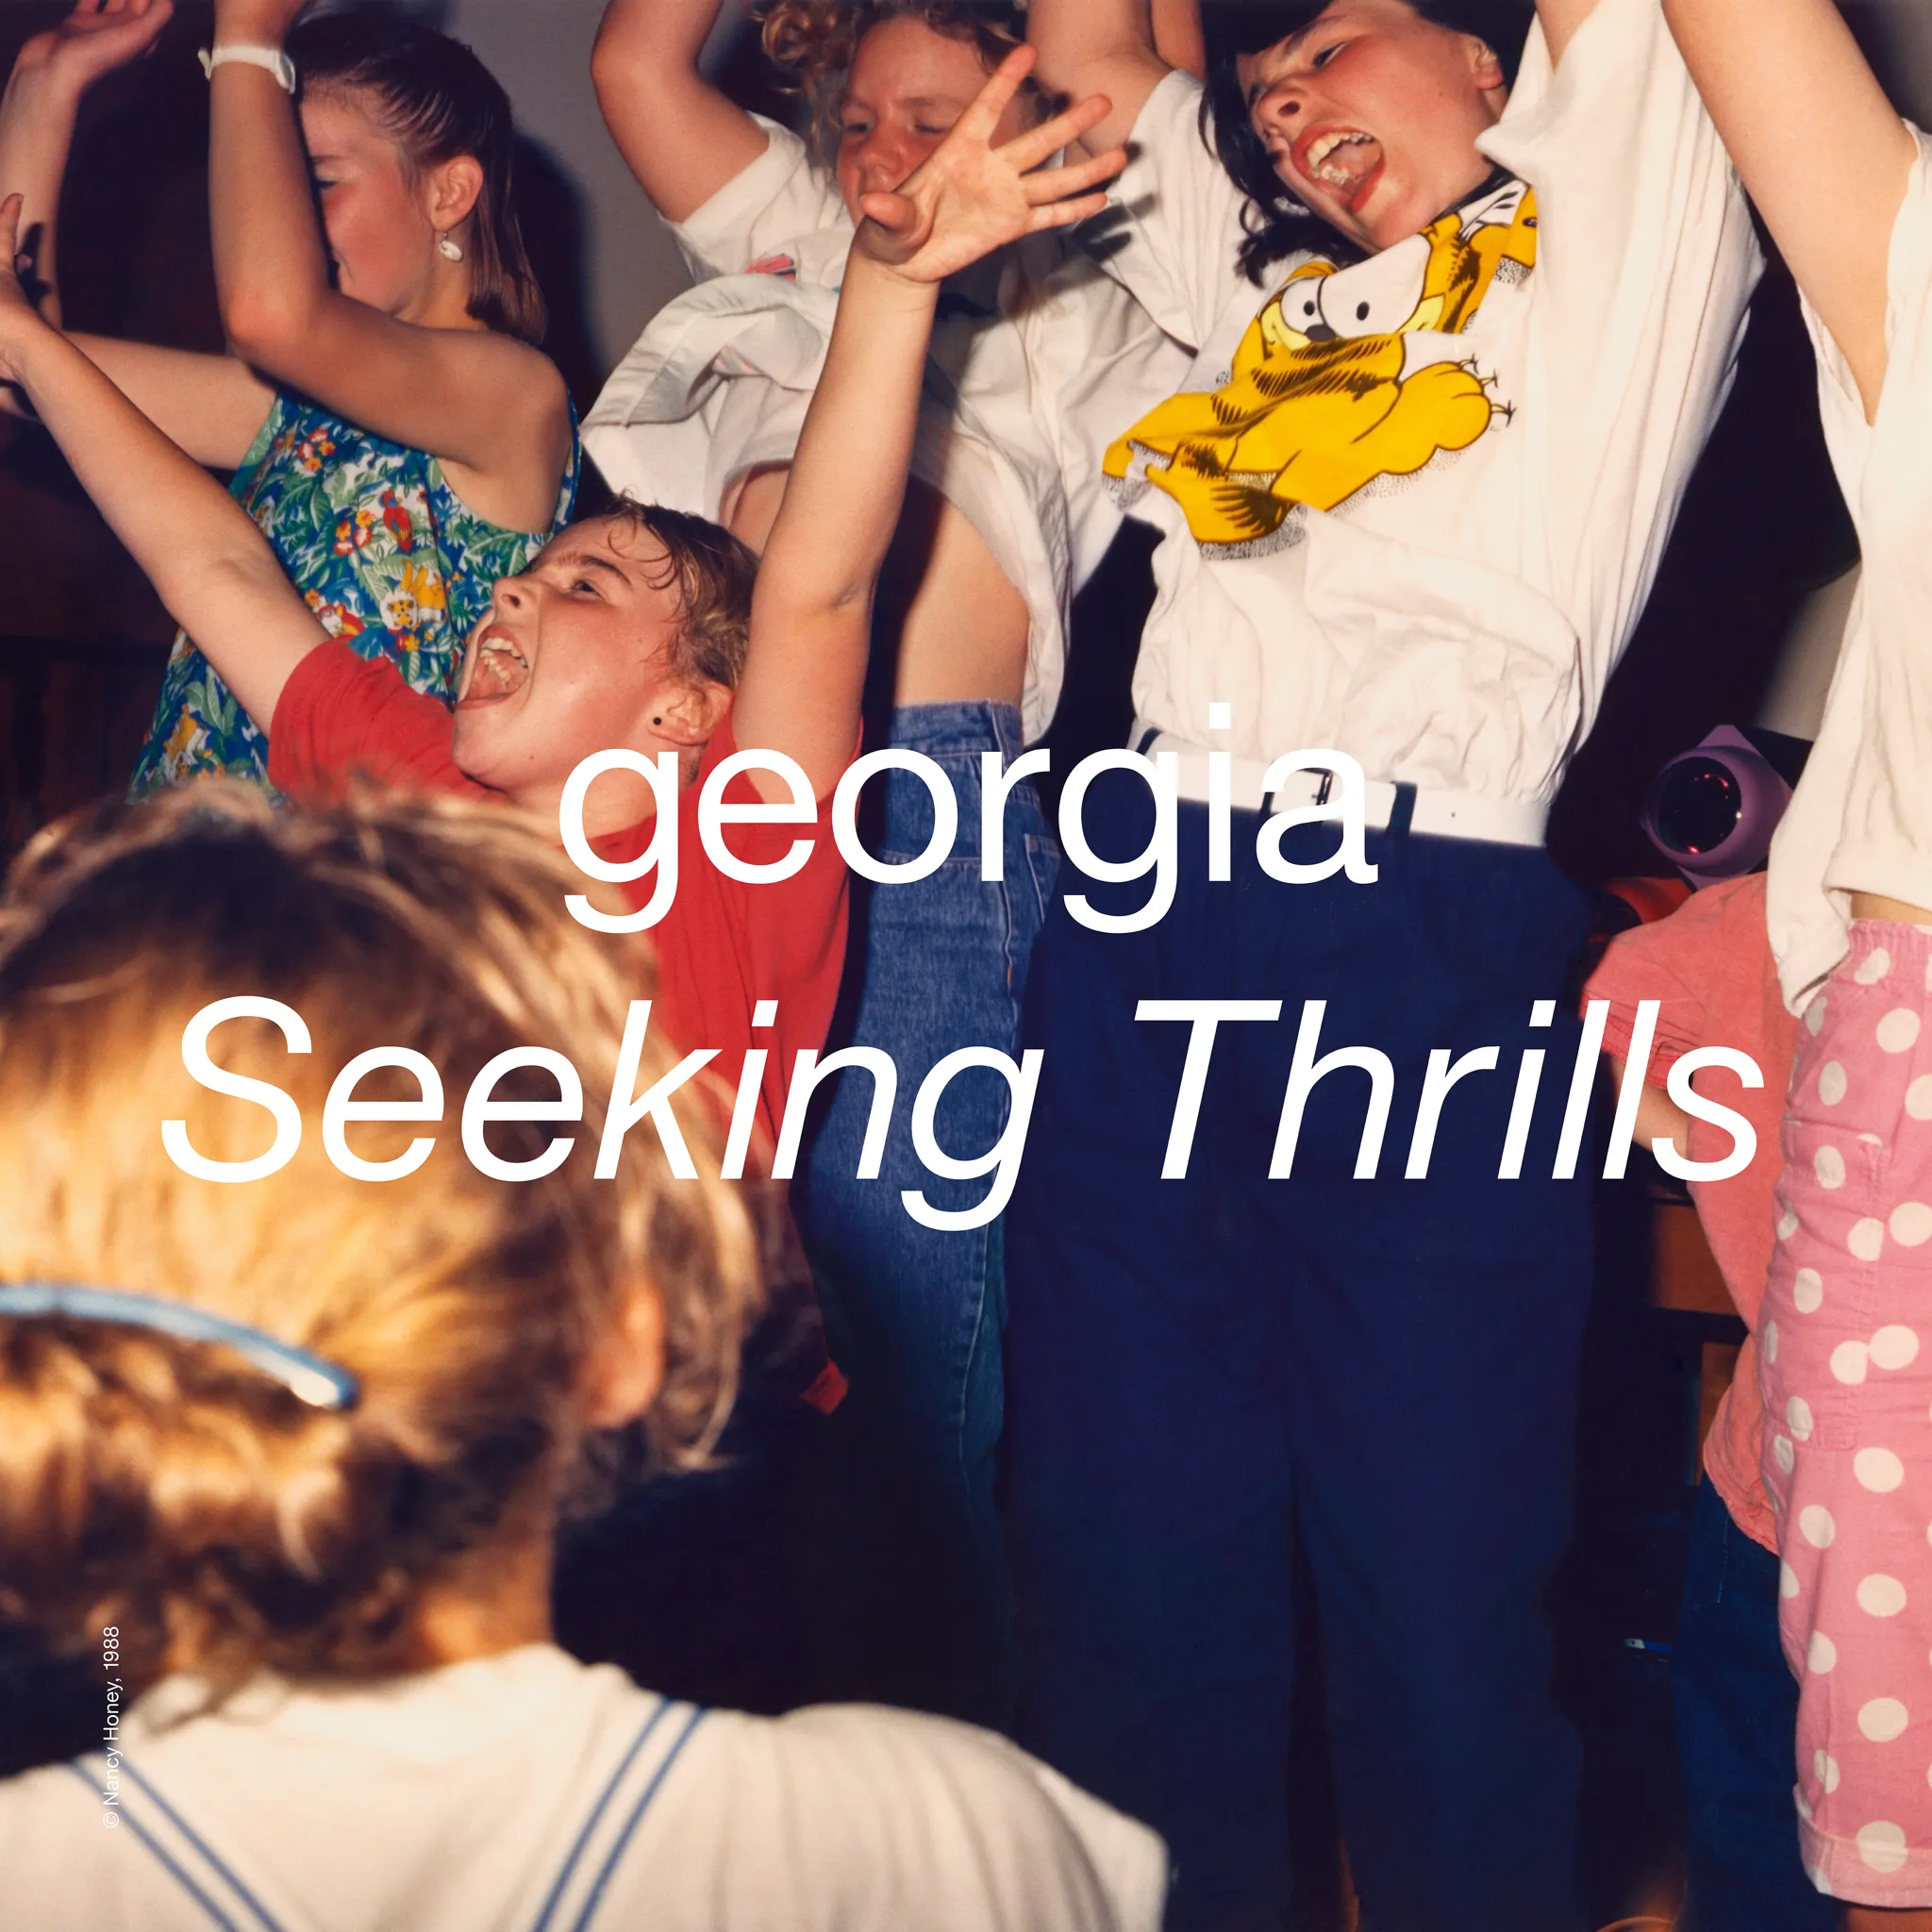 Georgia - Seeking Thrills artwork